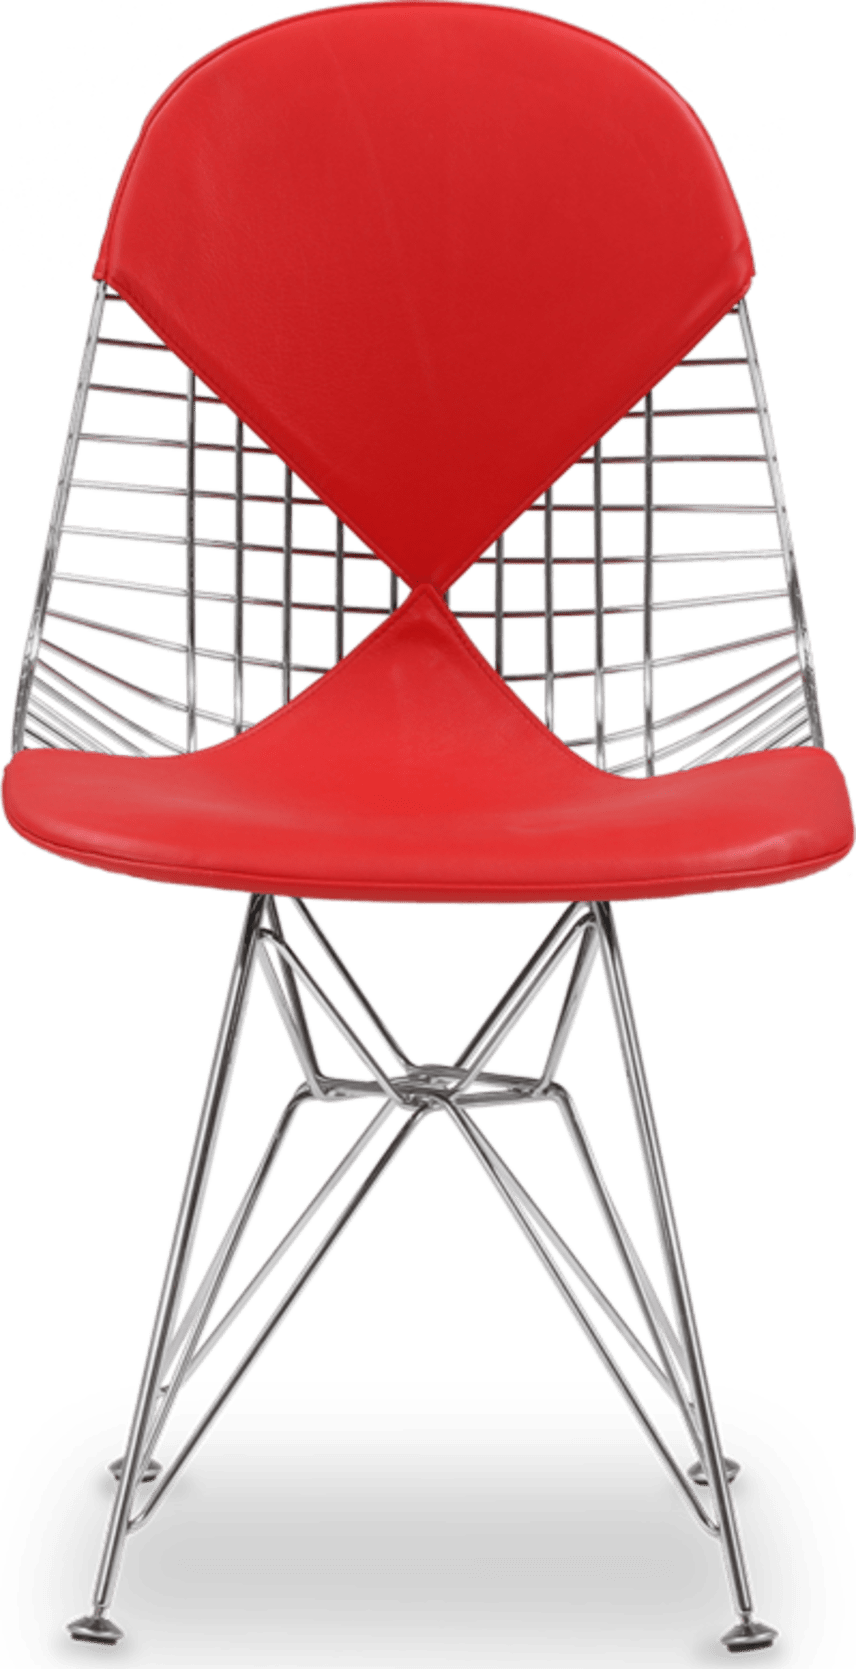 Bikini Wire Dining Chair Red image.